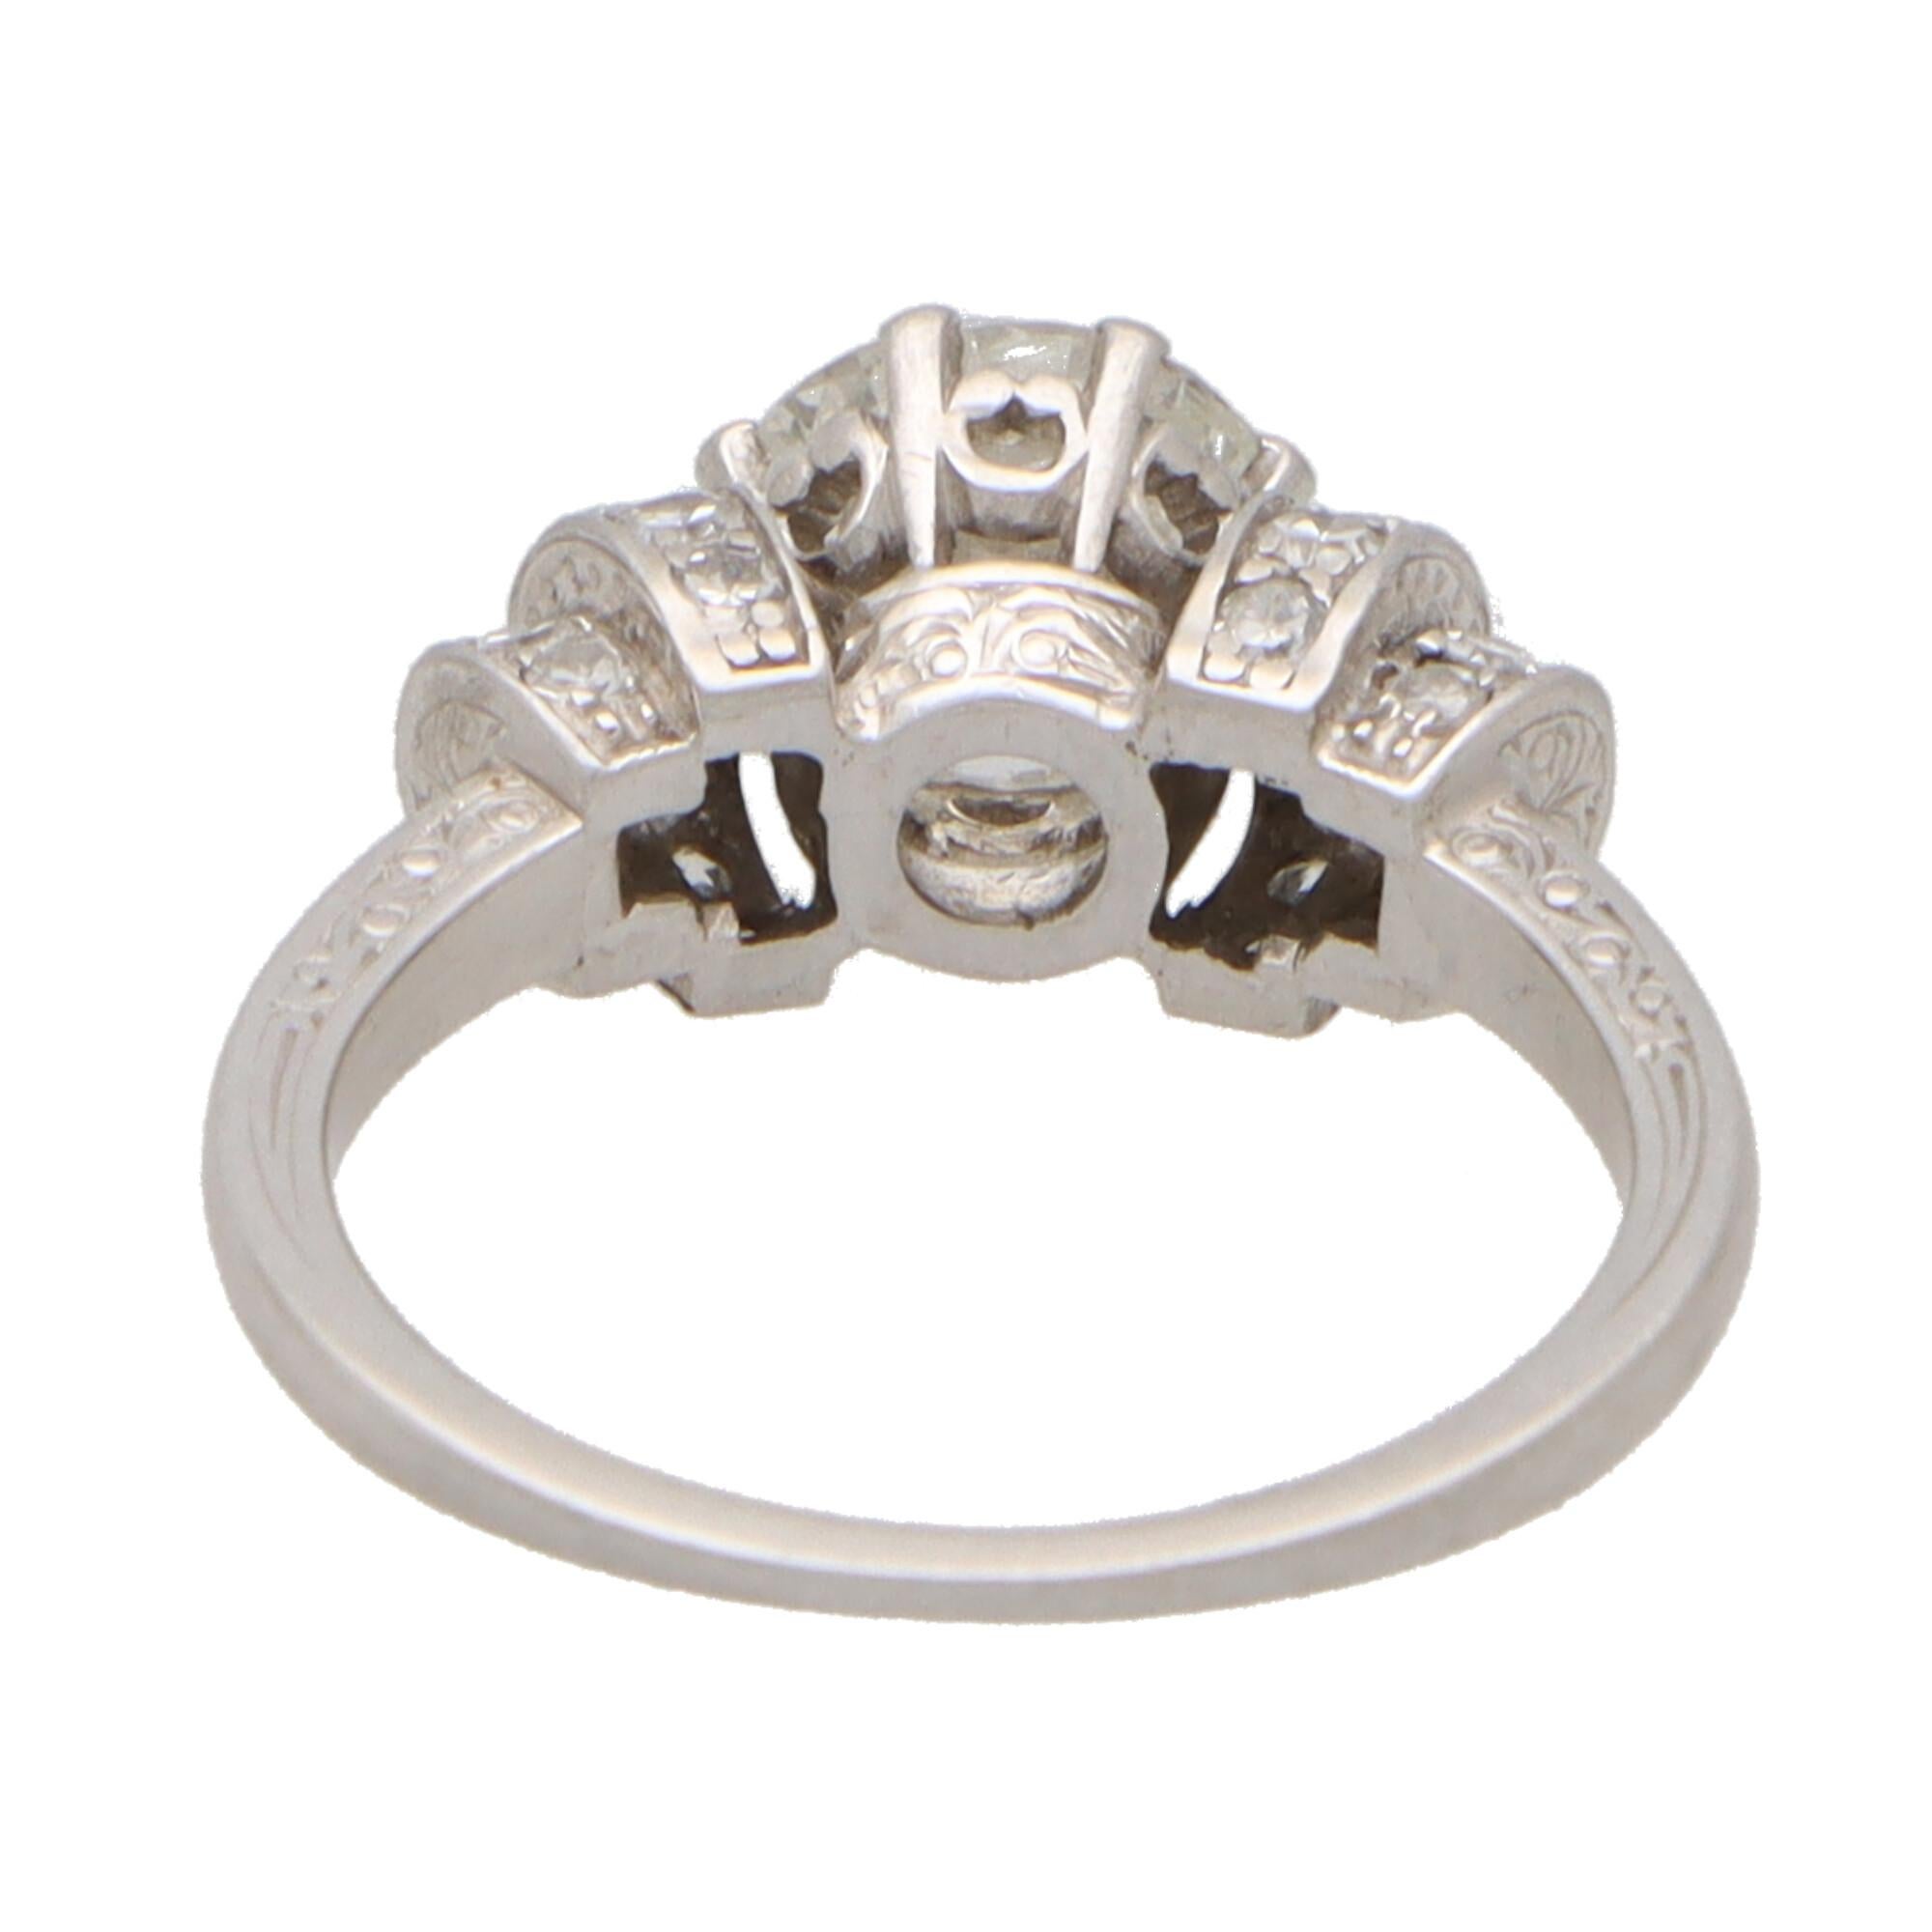 Vintage Art Deco 1.51ct Old European Cut Diamond Ring Set in Platinum For Sale 1